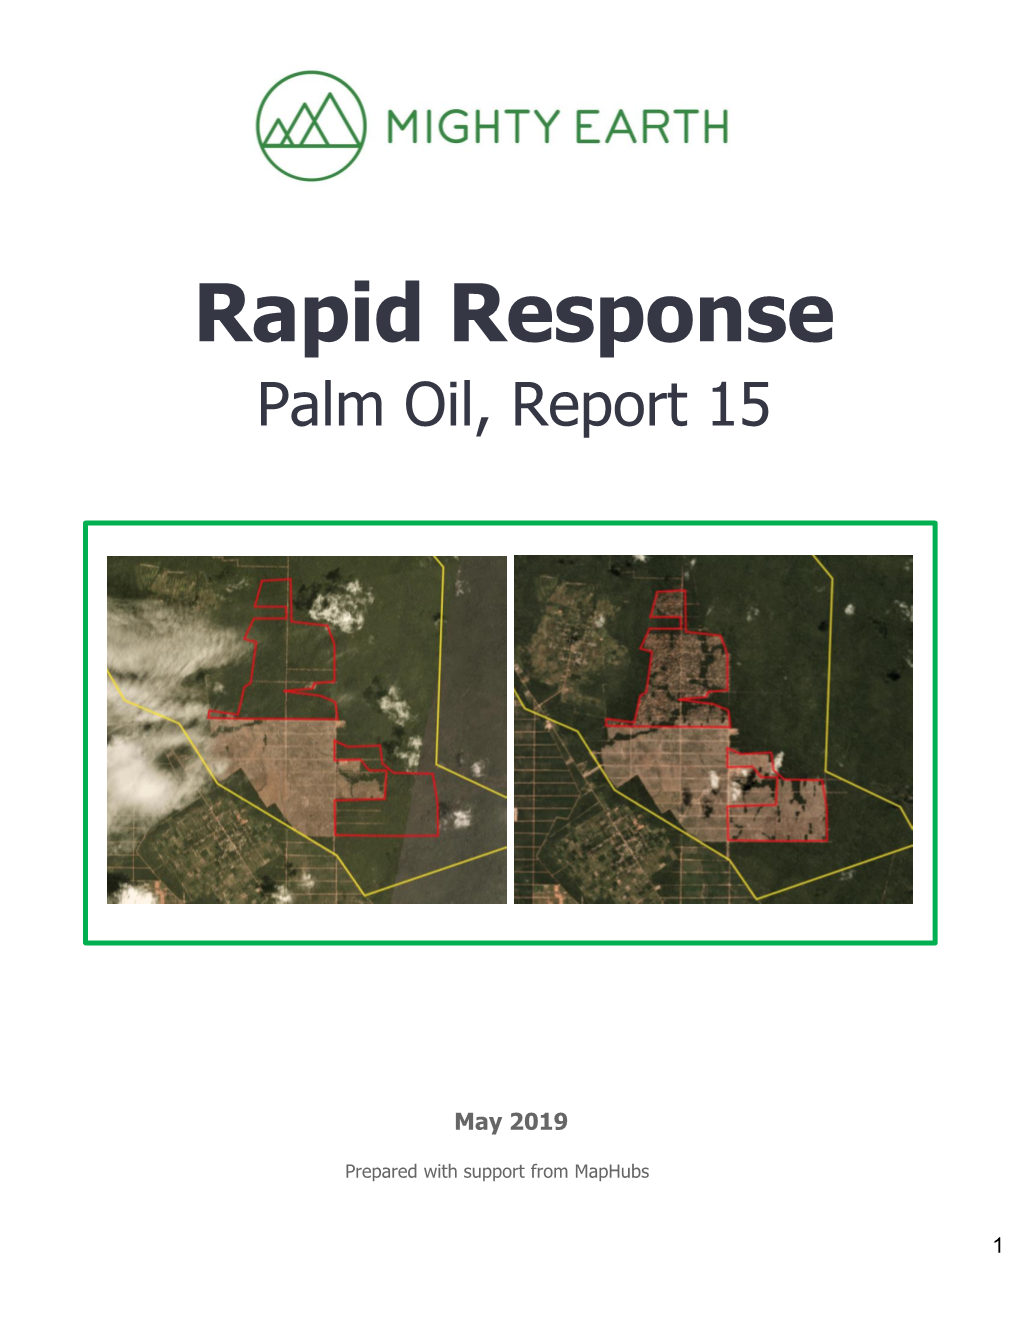 Rapid Response Palm Oil, Report 15